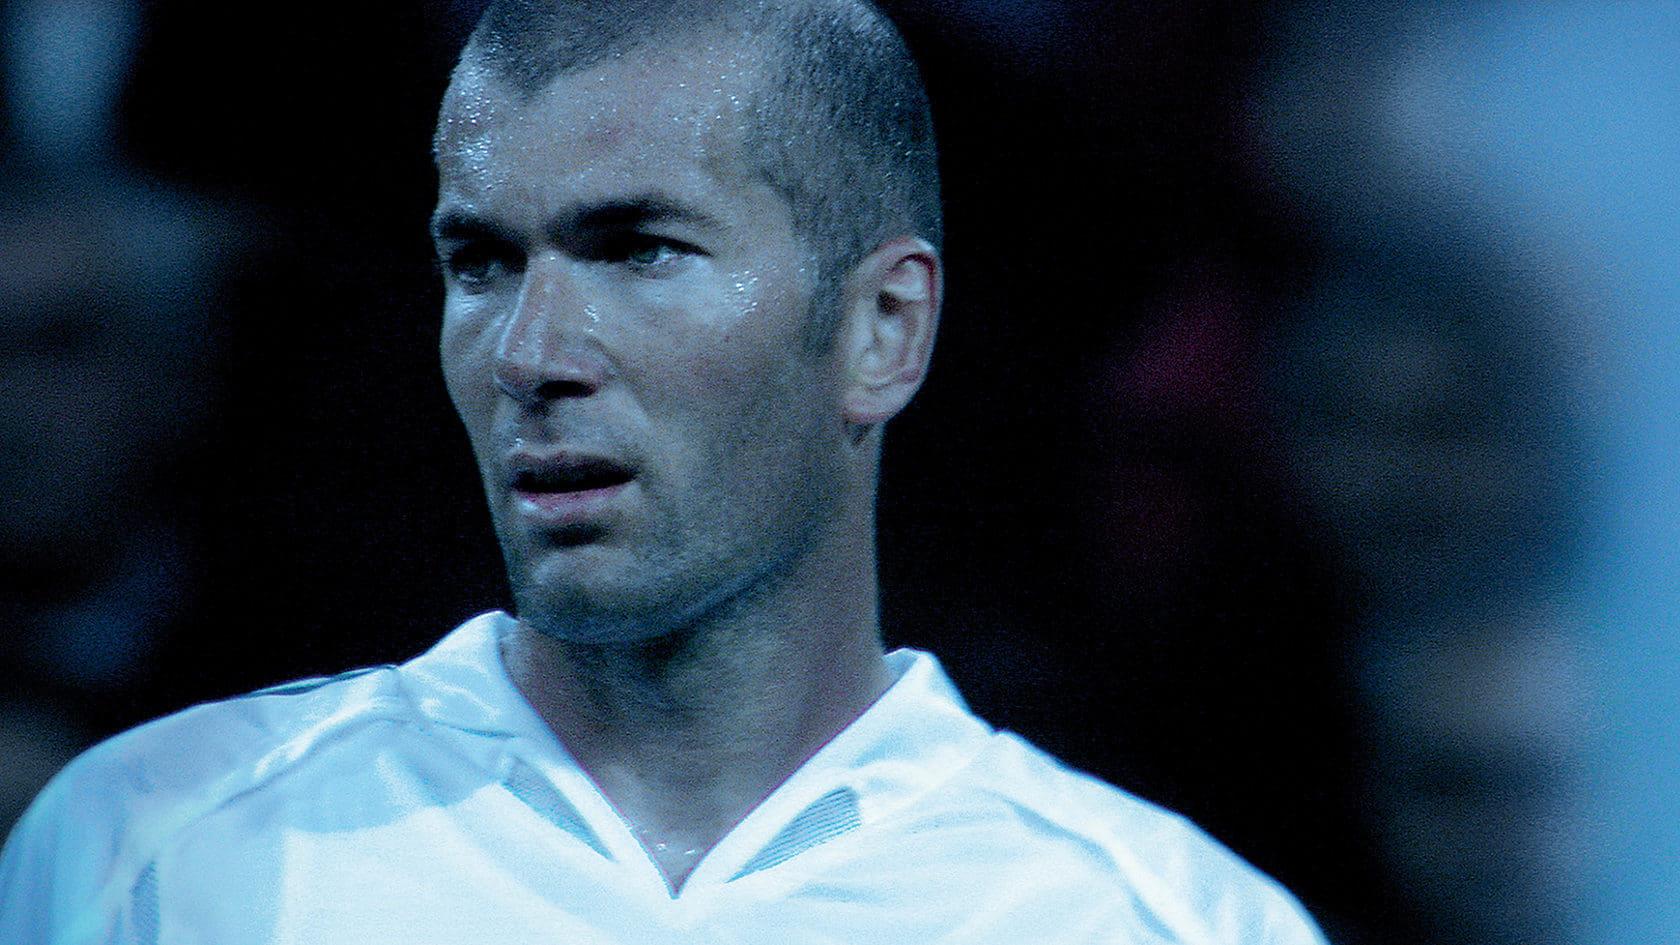 Zidane: A 21st Century Portrait backdrop